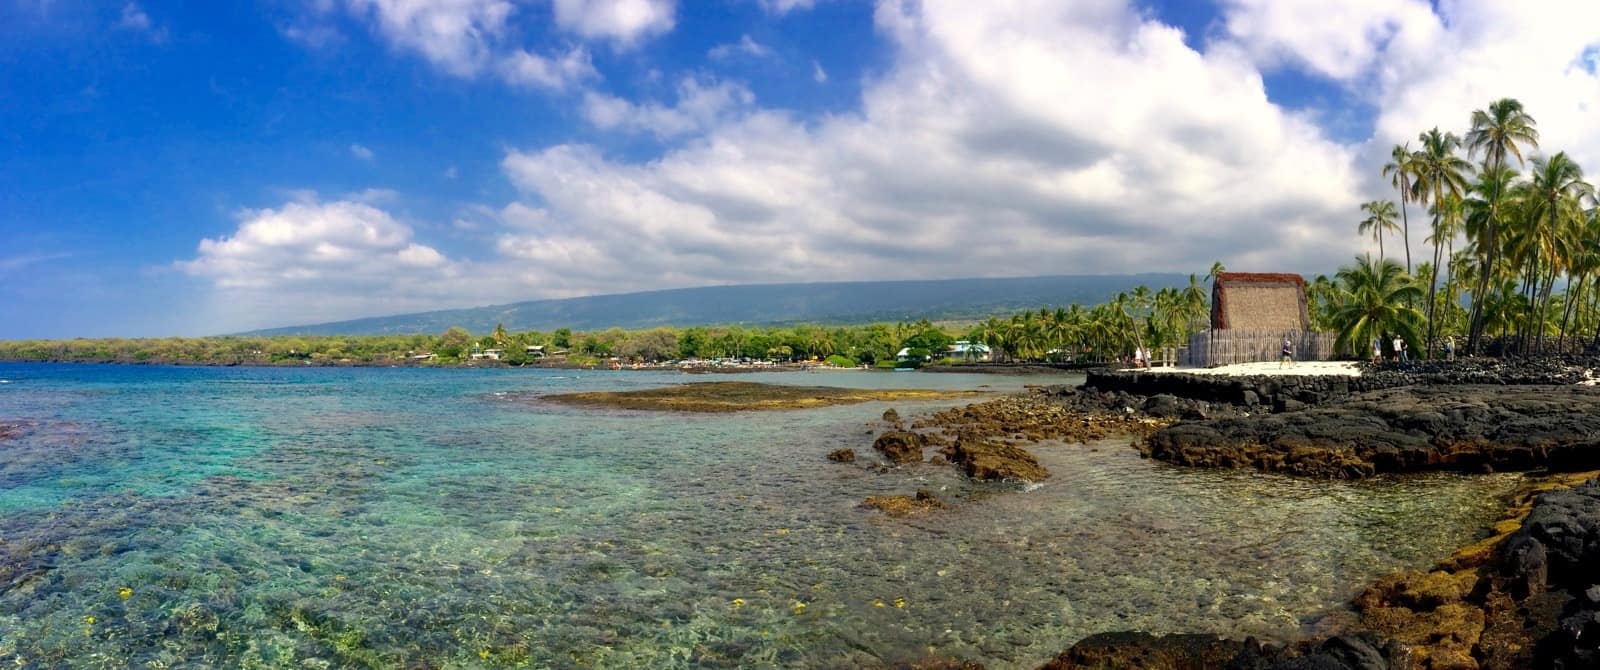 Love Big Island: Local Travel + Vacation Guide for Hawai'i island